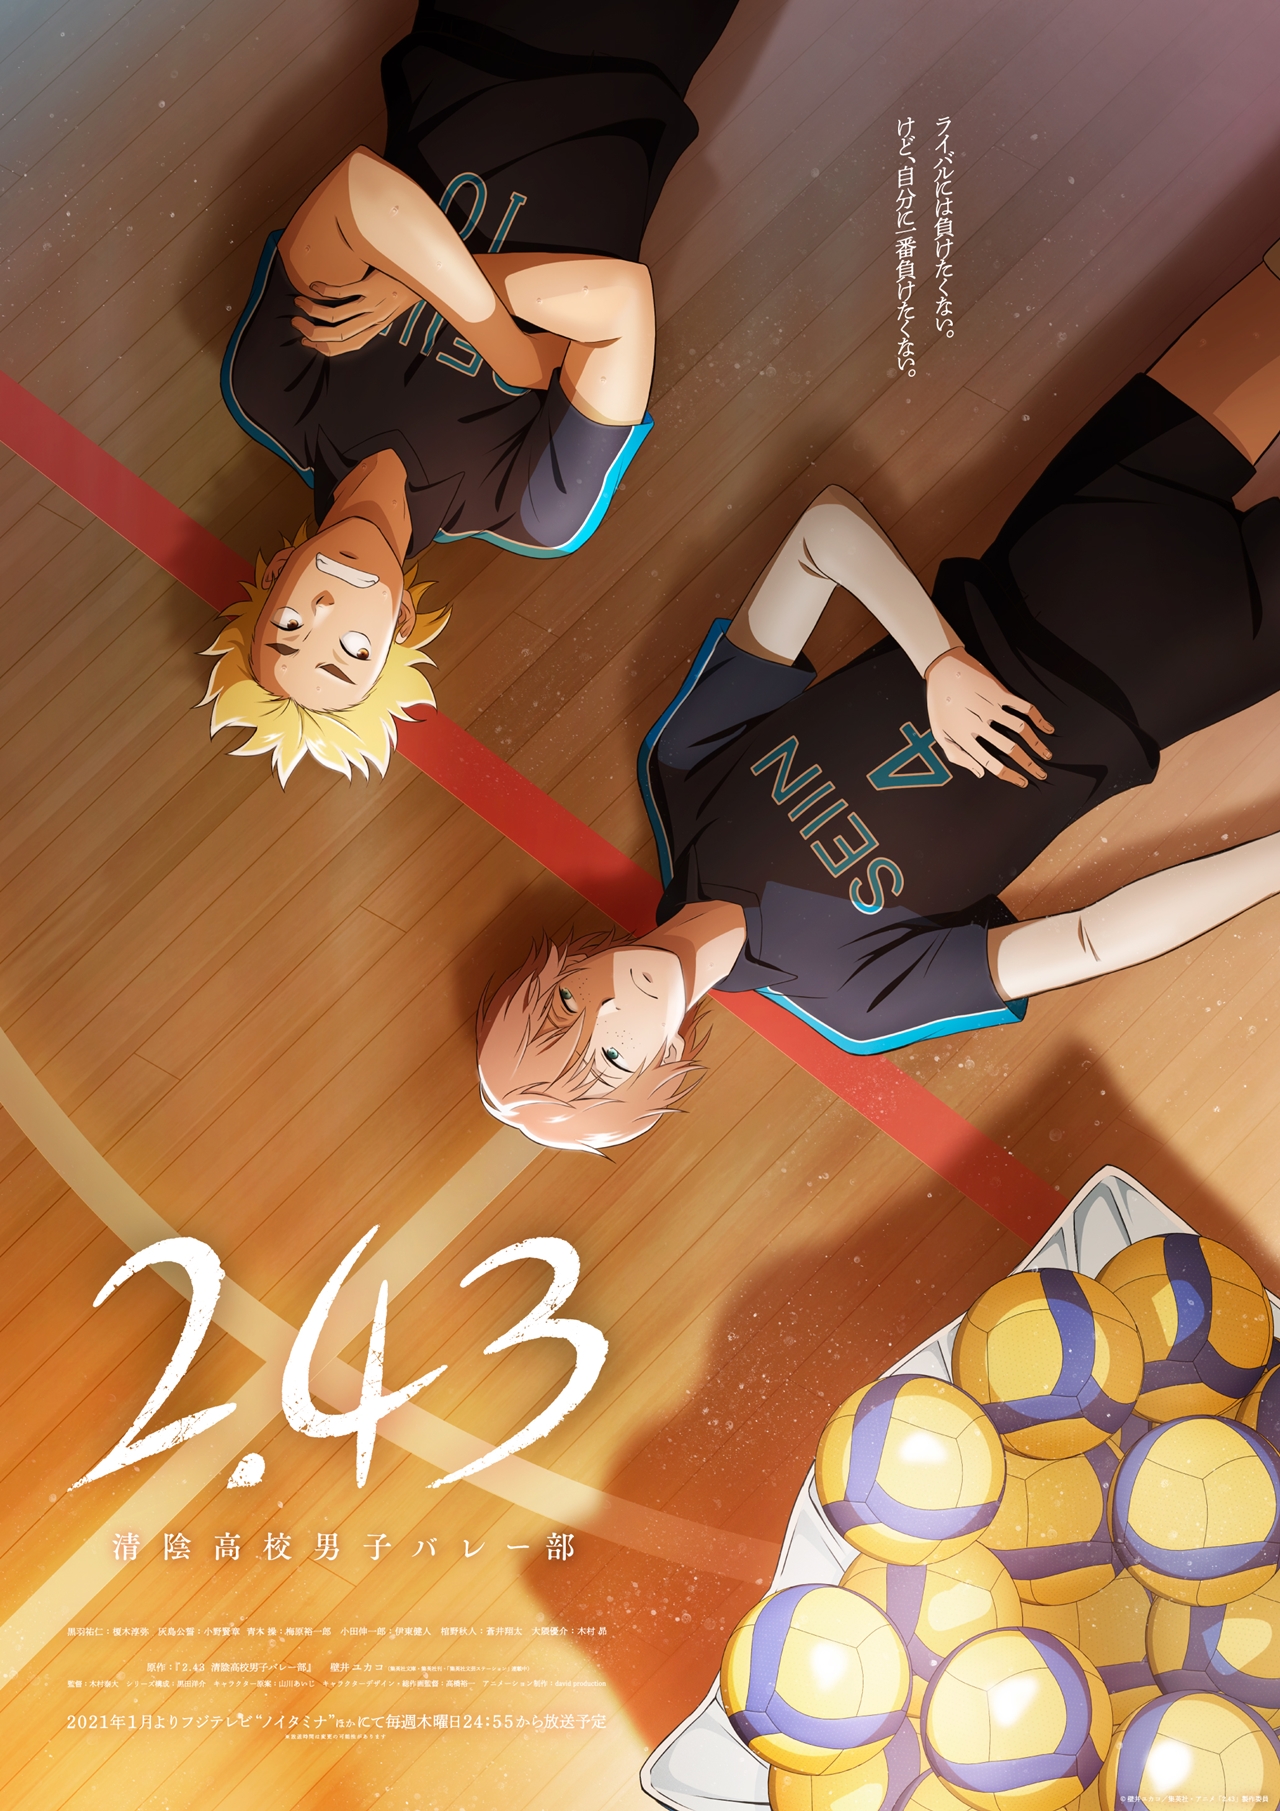 El Anime 243 Seiin Koukou Danshi Volley Bu Revela Su Tercer Visual